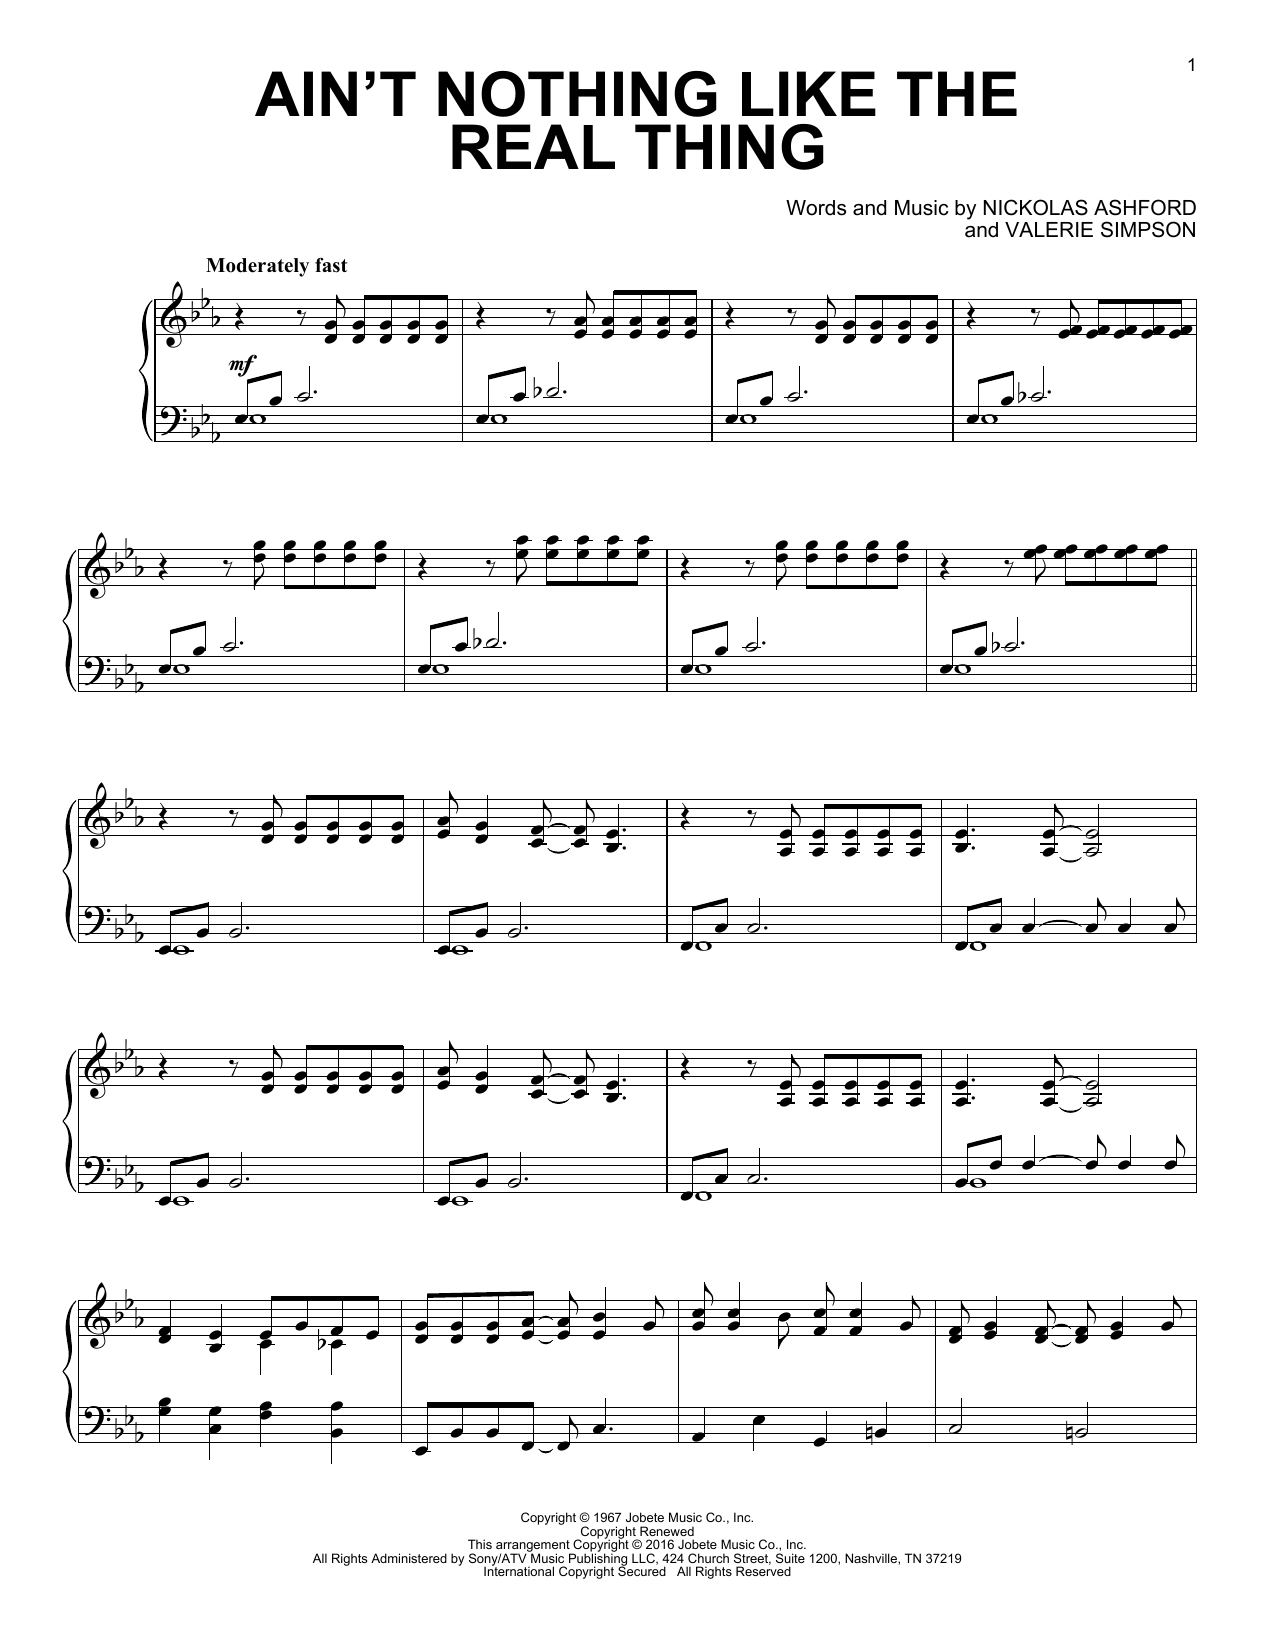 Nickolas Ashford Ain't Nothing Like The Real Thing [Jazz version] Sheet Music Notes & Chords for Piano - Download or Print PDF